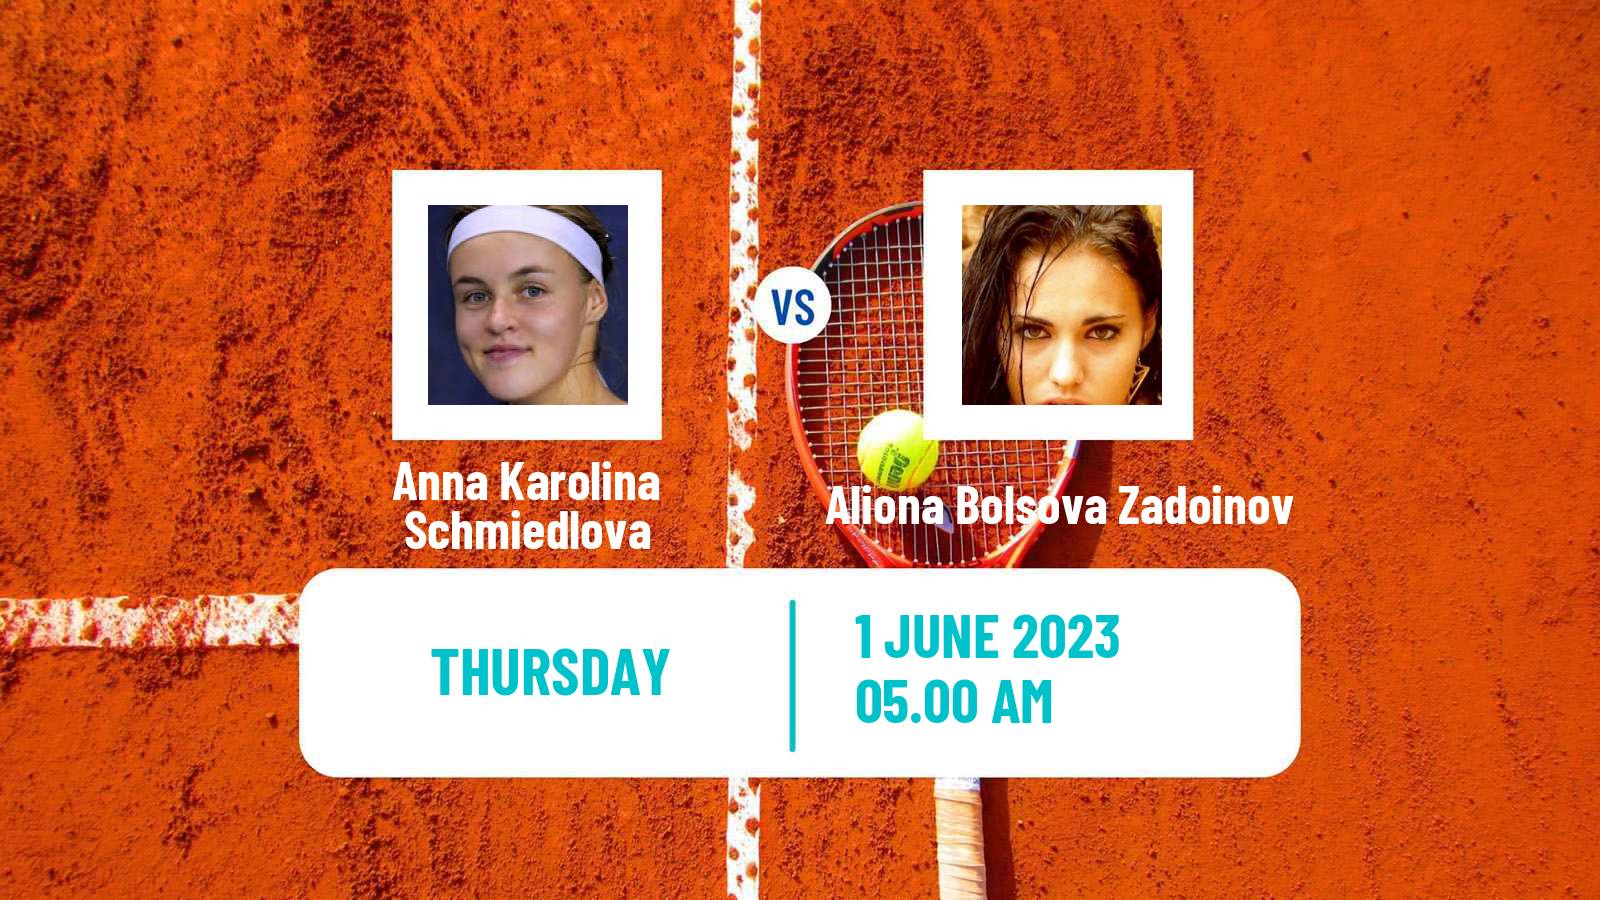 Tennis WTA Roland Garros Anna Karolina Schmiedlova - Aliona Bolsova Zadoinov